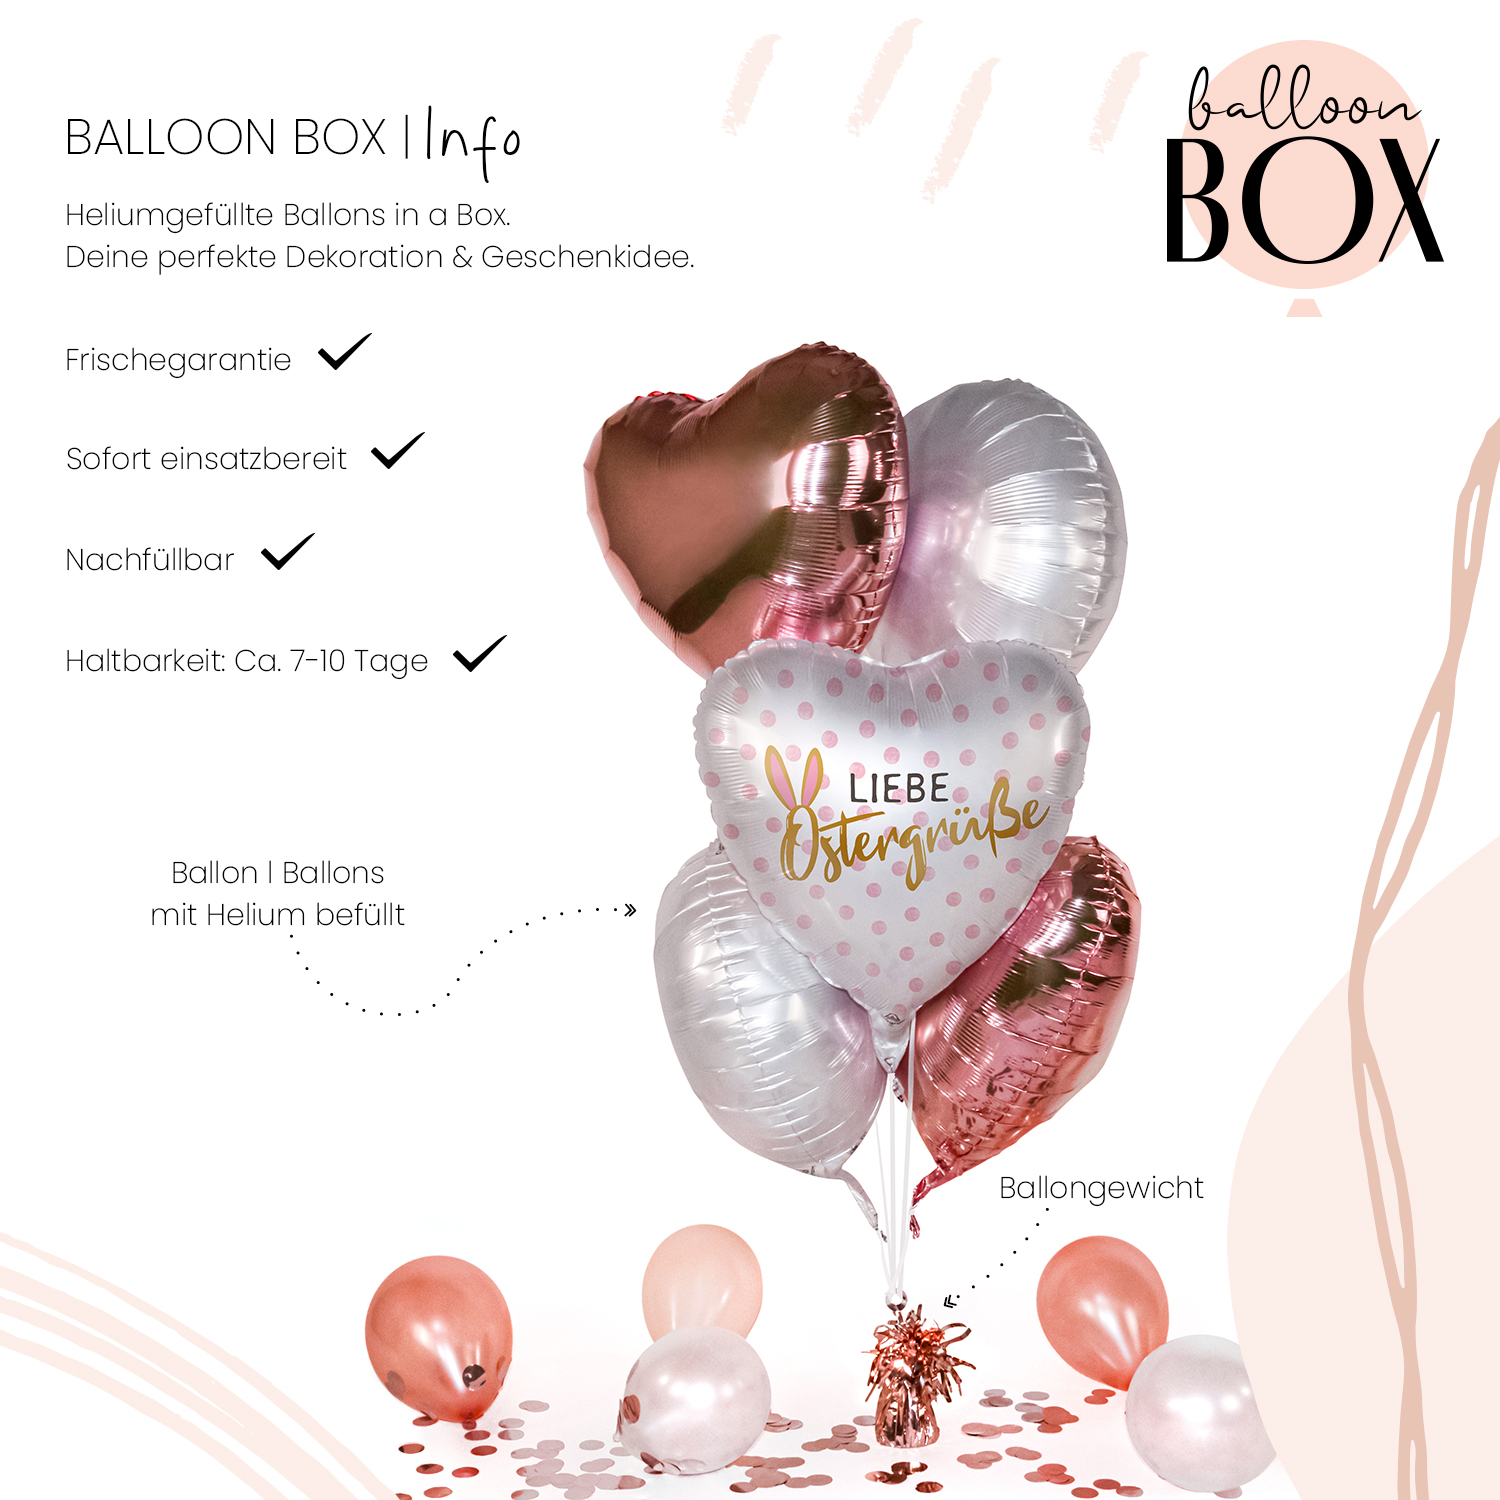 Heliumballon in a Box - Liebe Ostergrüße